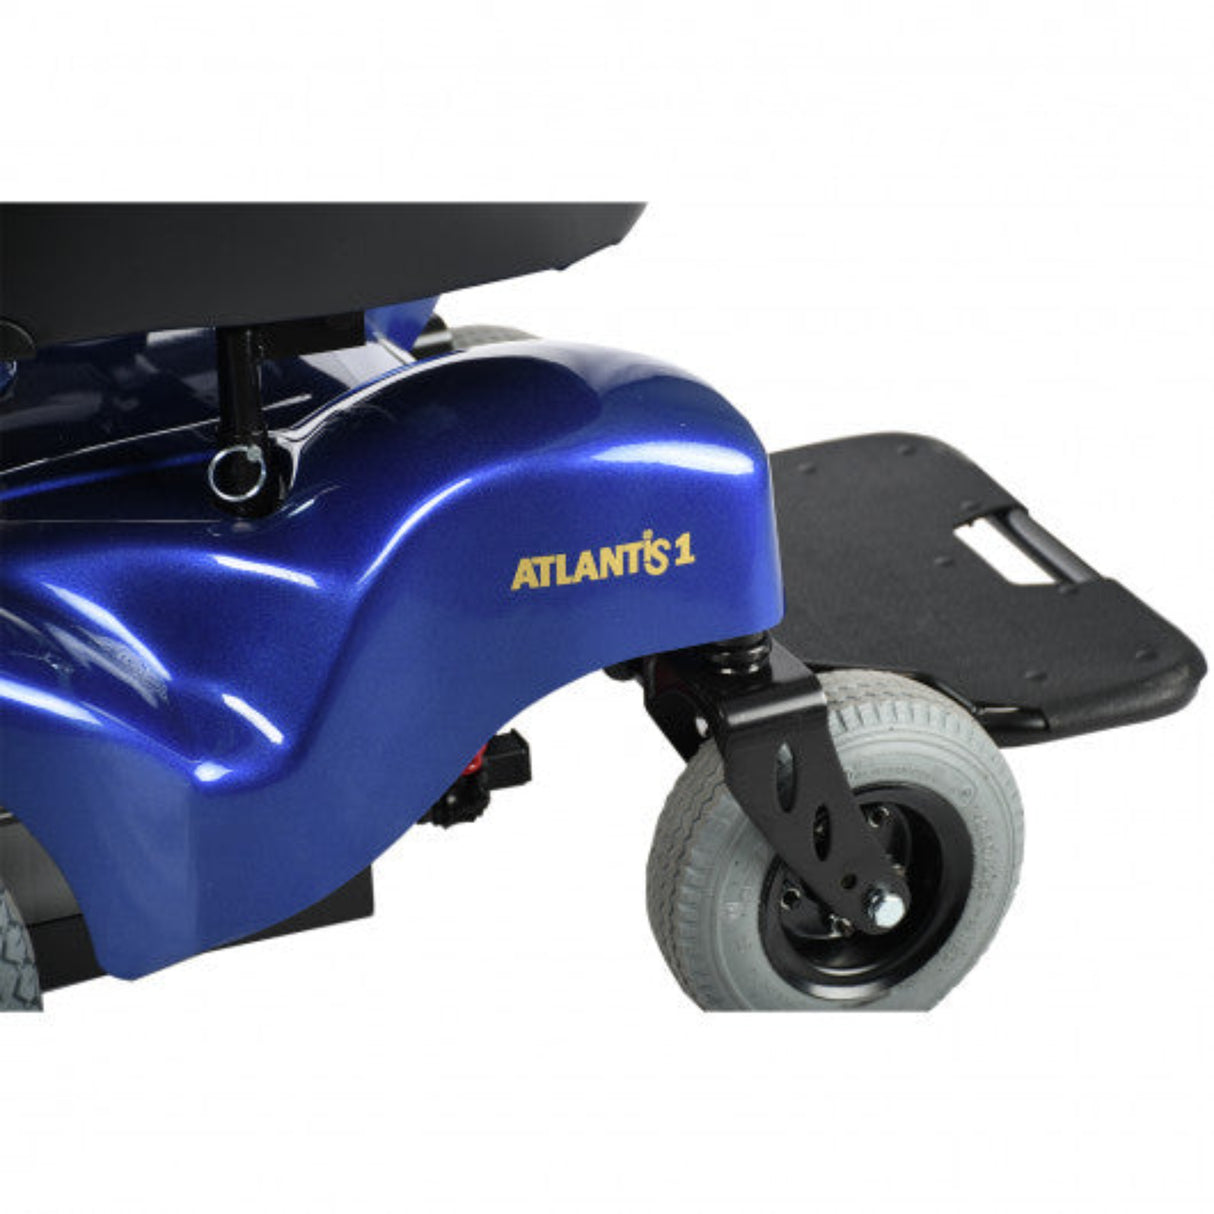 Merits Atlantis Heavy Duty Power Wheelchair